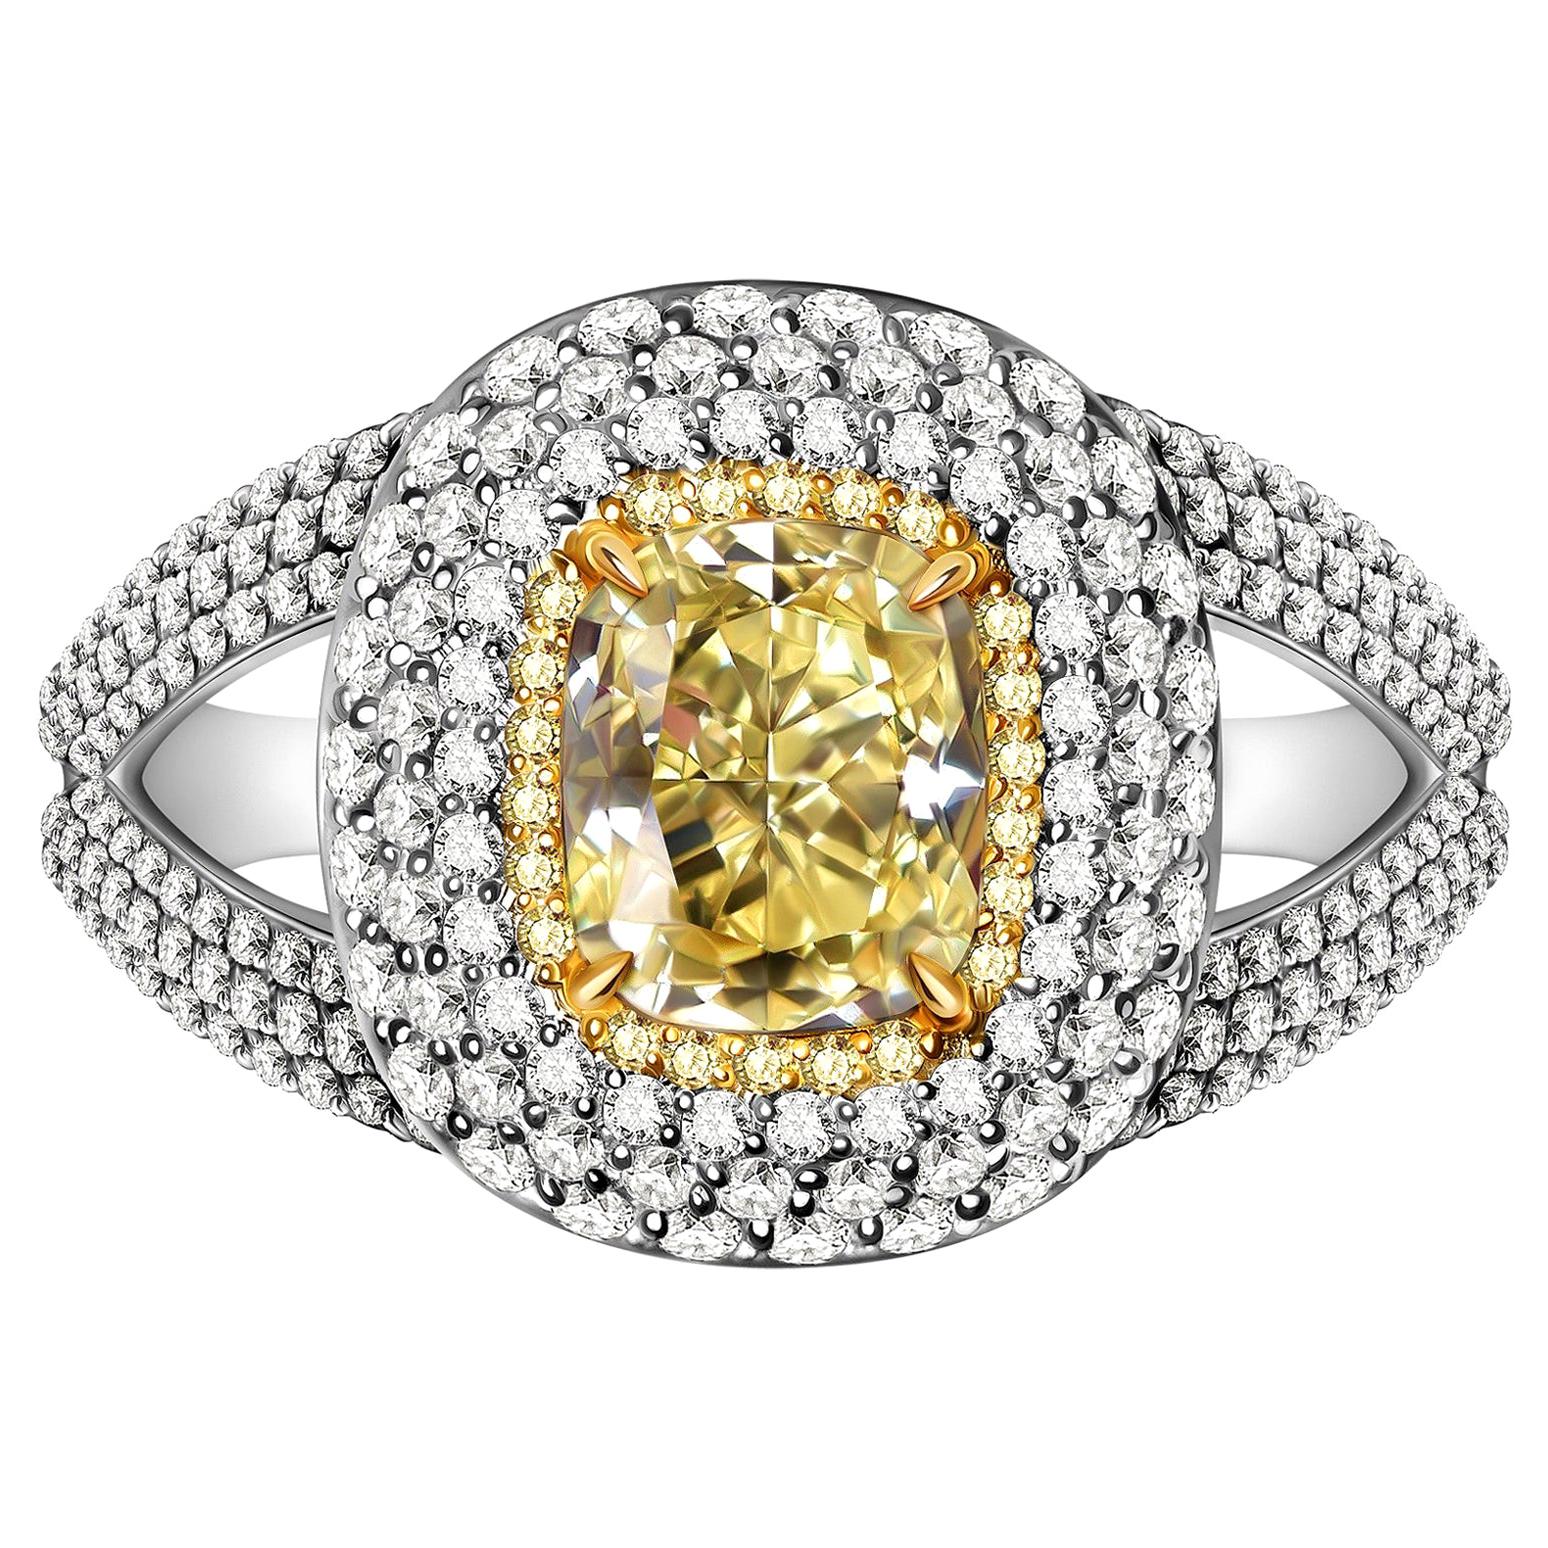 For Sale:  2.5 Carat Fancy Yellow Diamond and White Diamond 18 Karat White Gold Ring